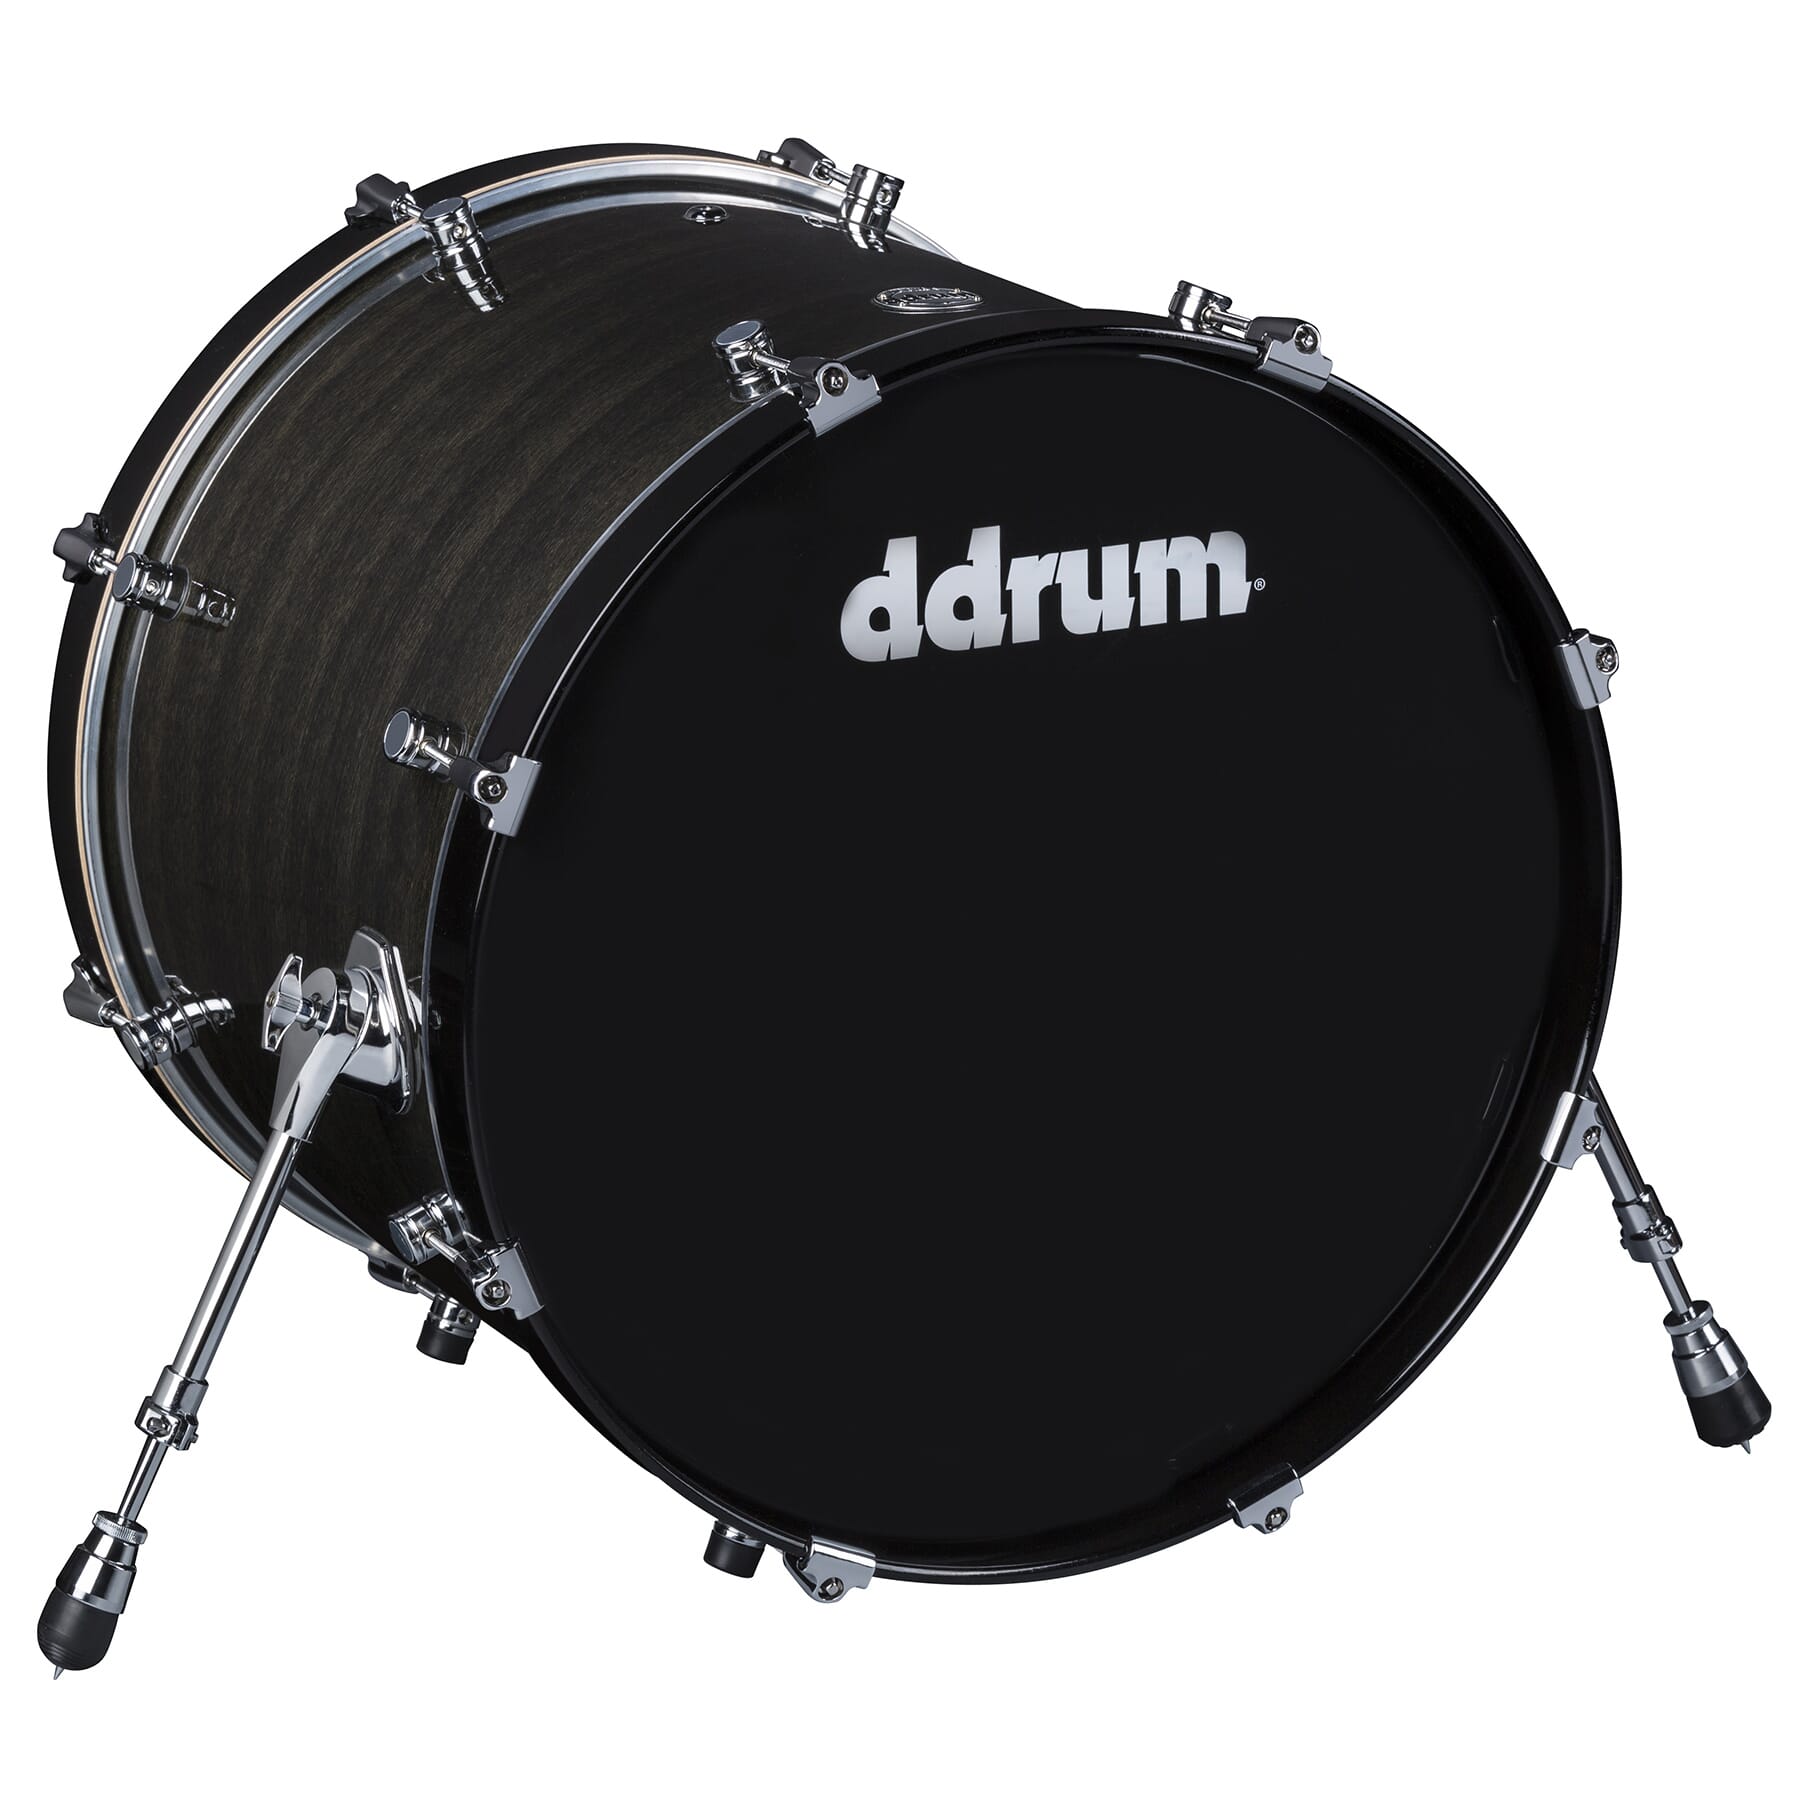 Reflex Series Bass drum 16x22 Trans black lacquer